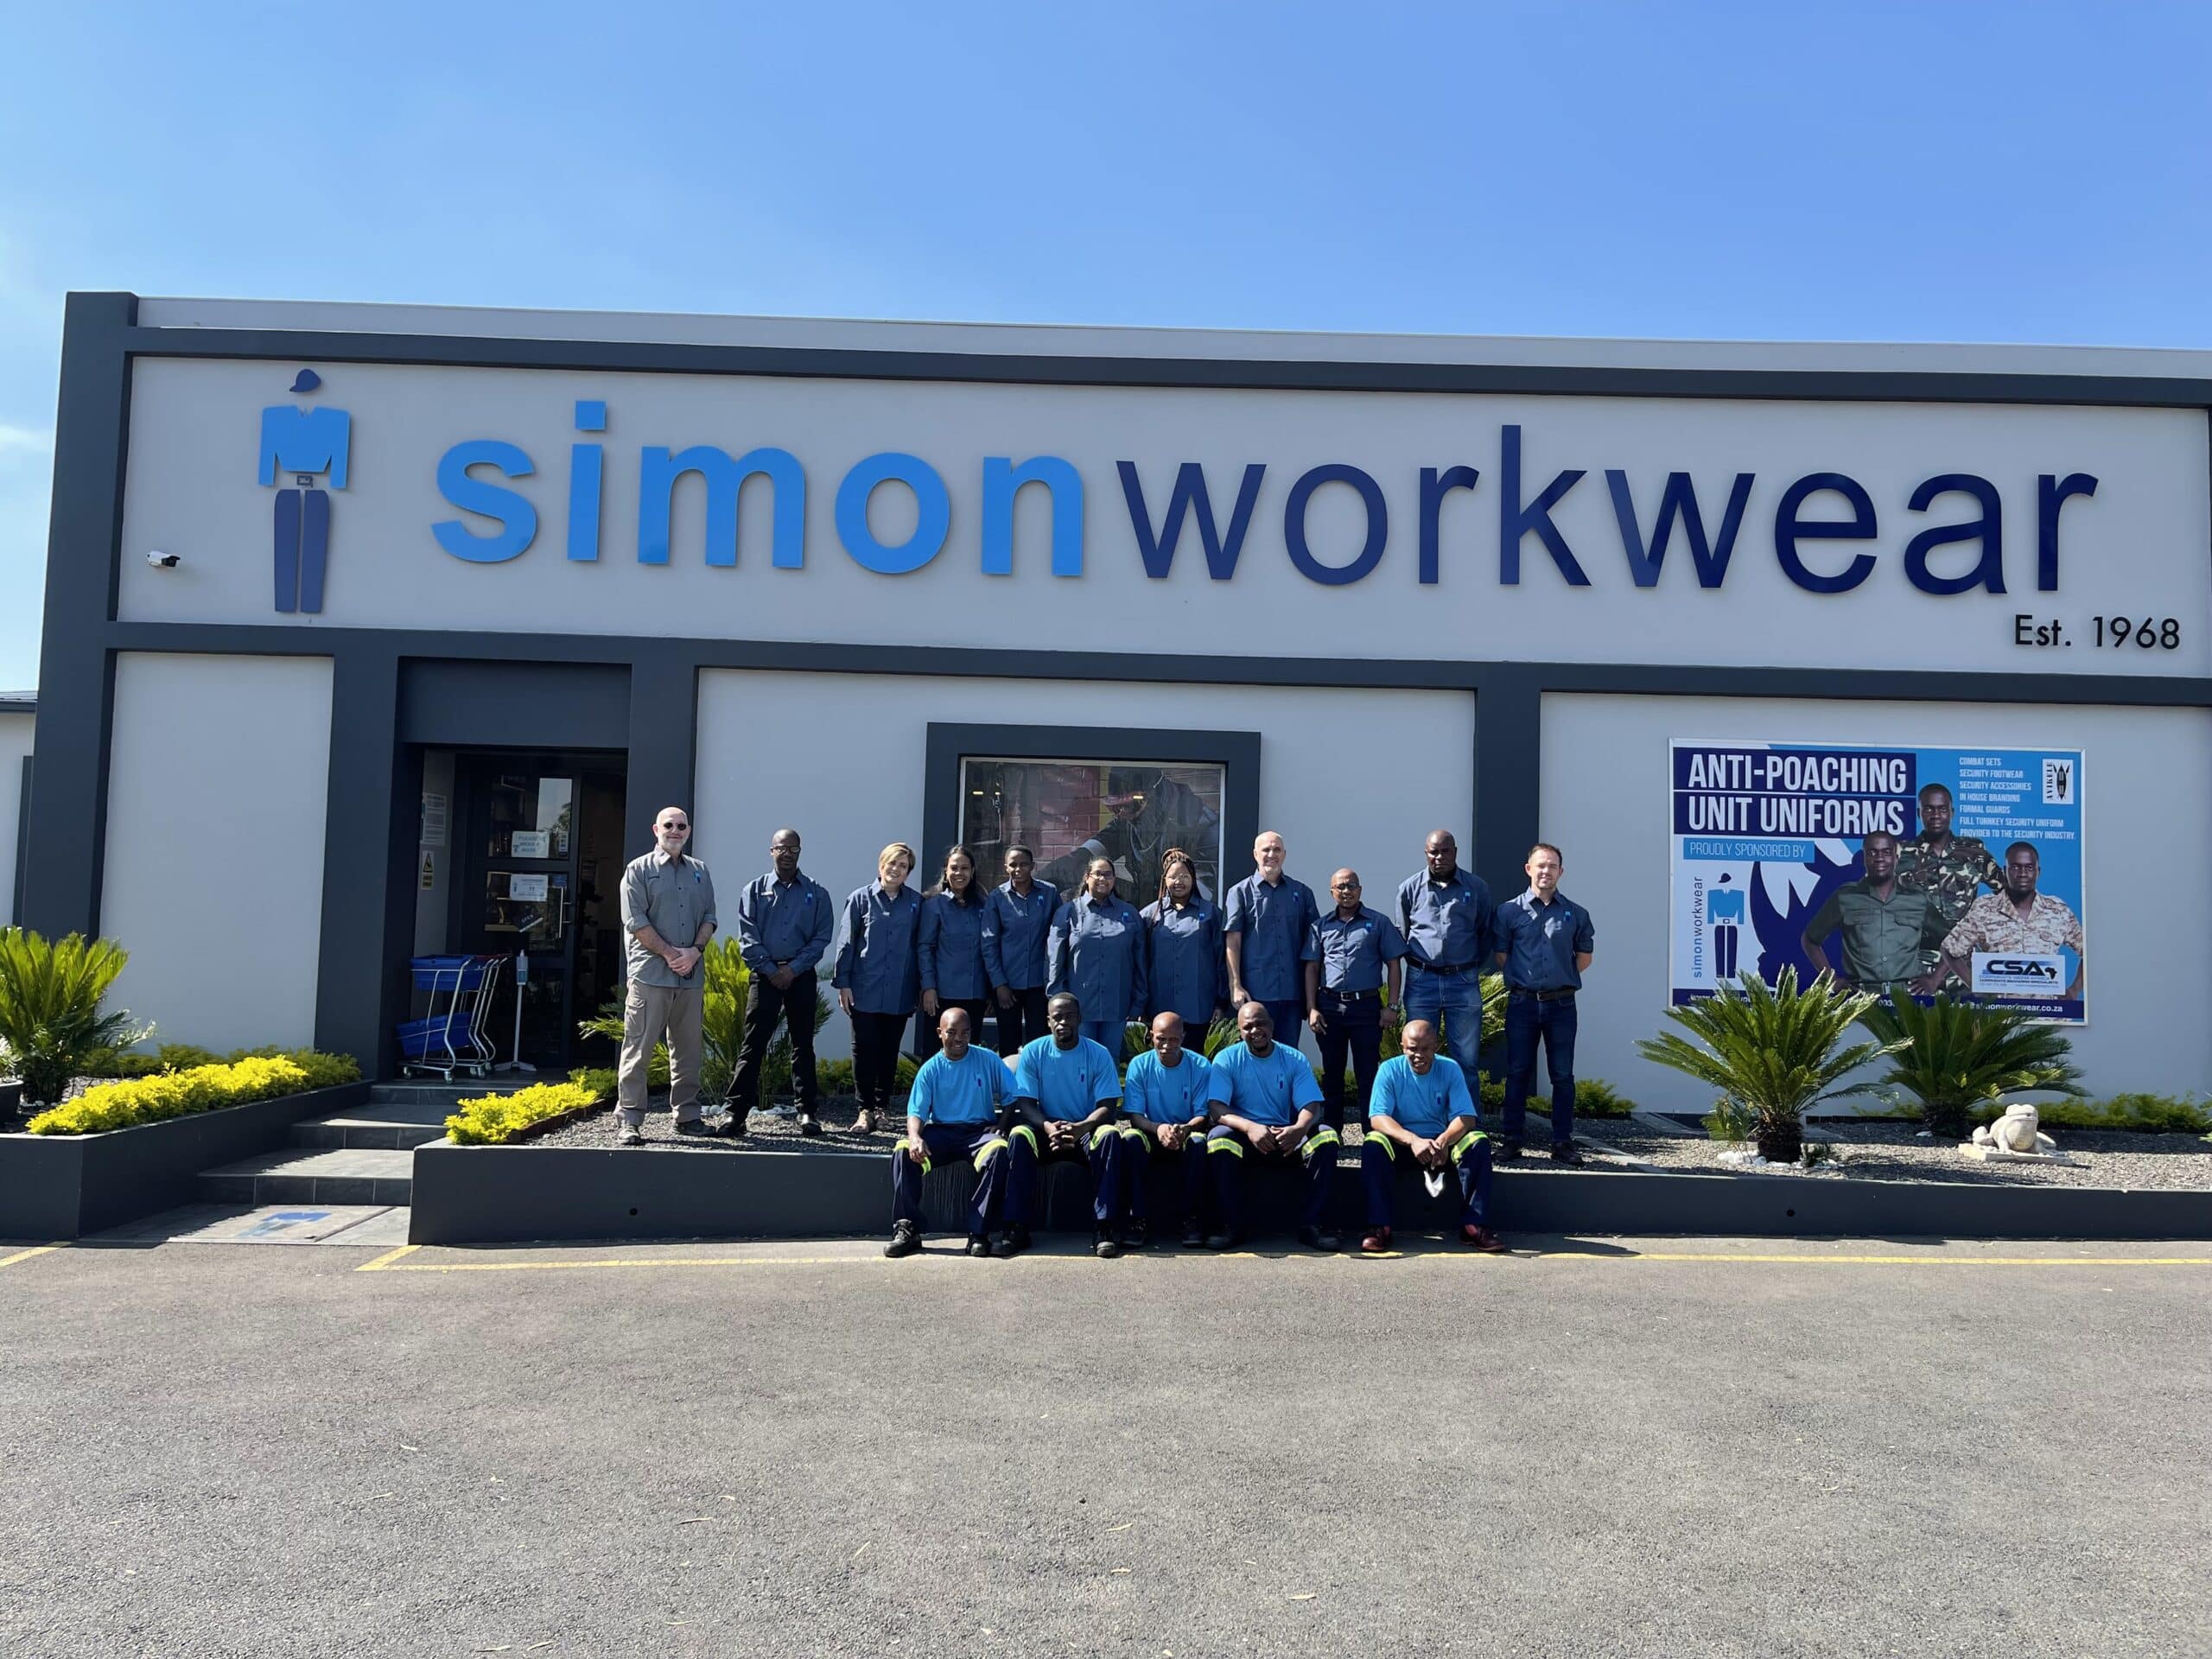 Simon workwear team